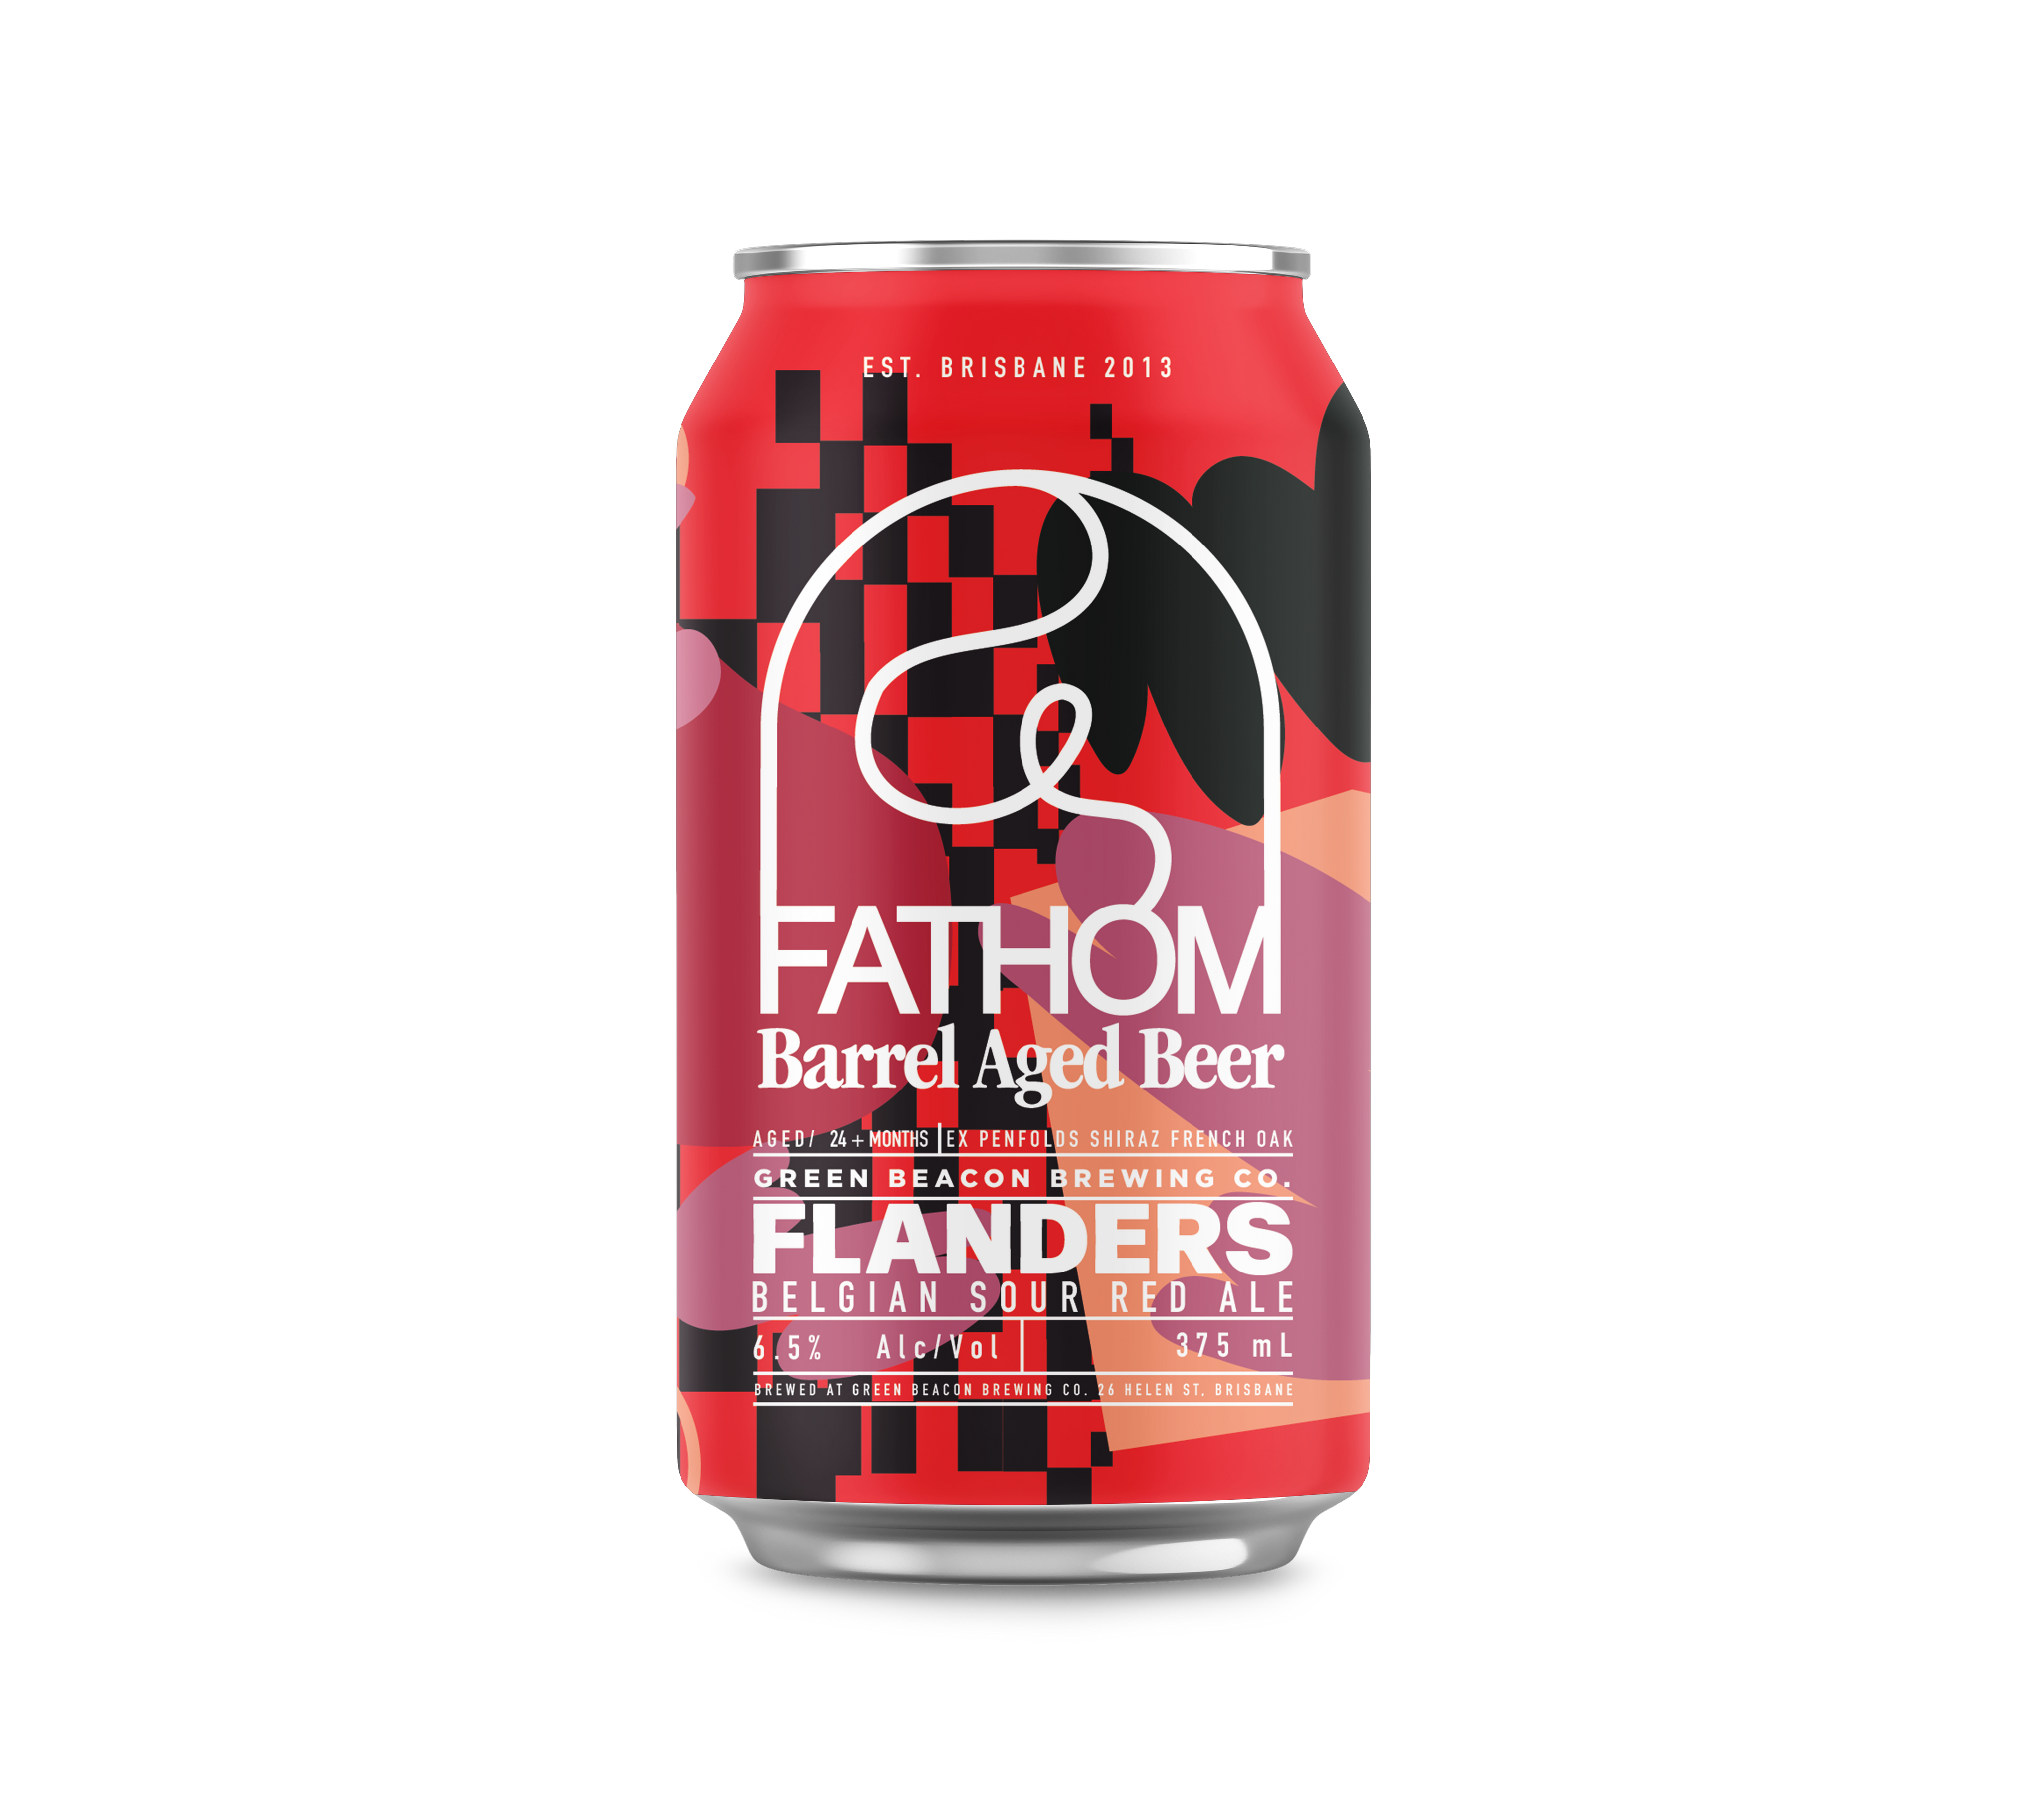 Flanders Belgian Sour Red Ale